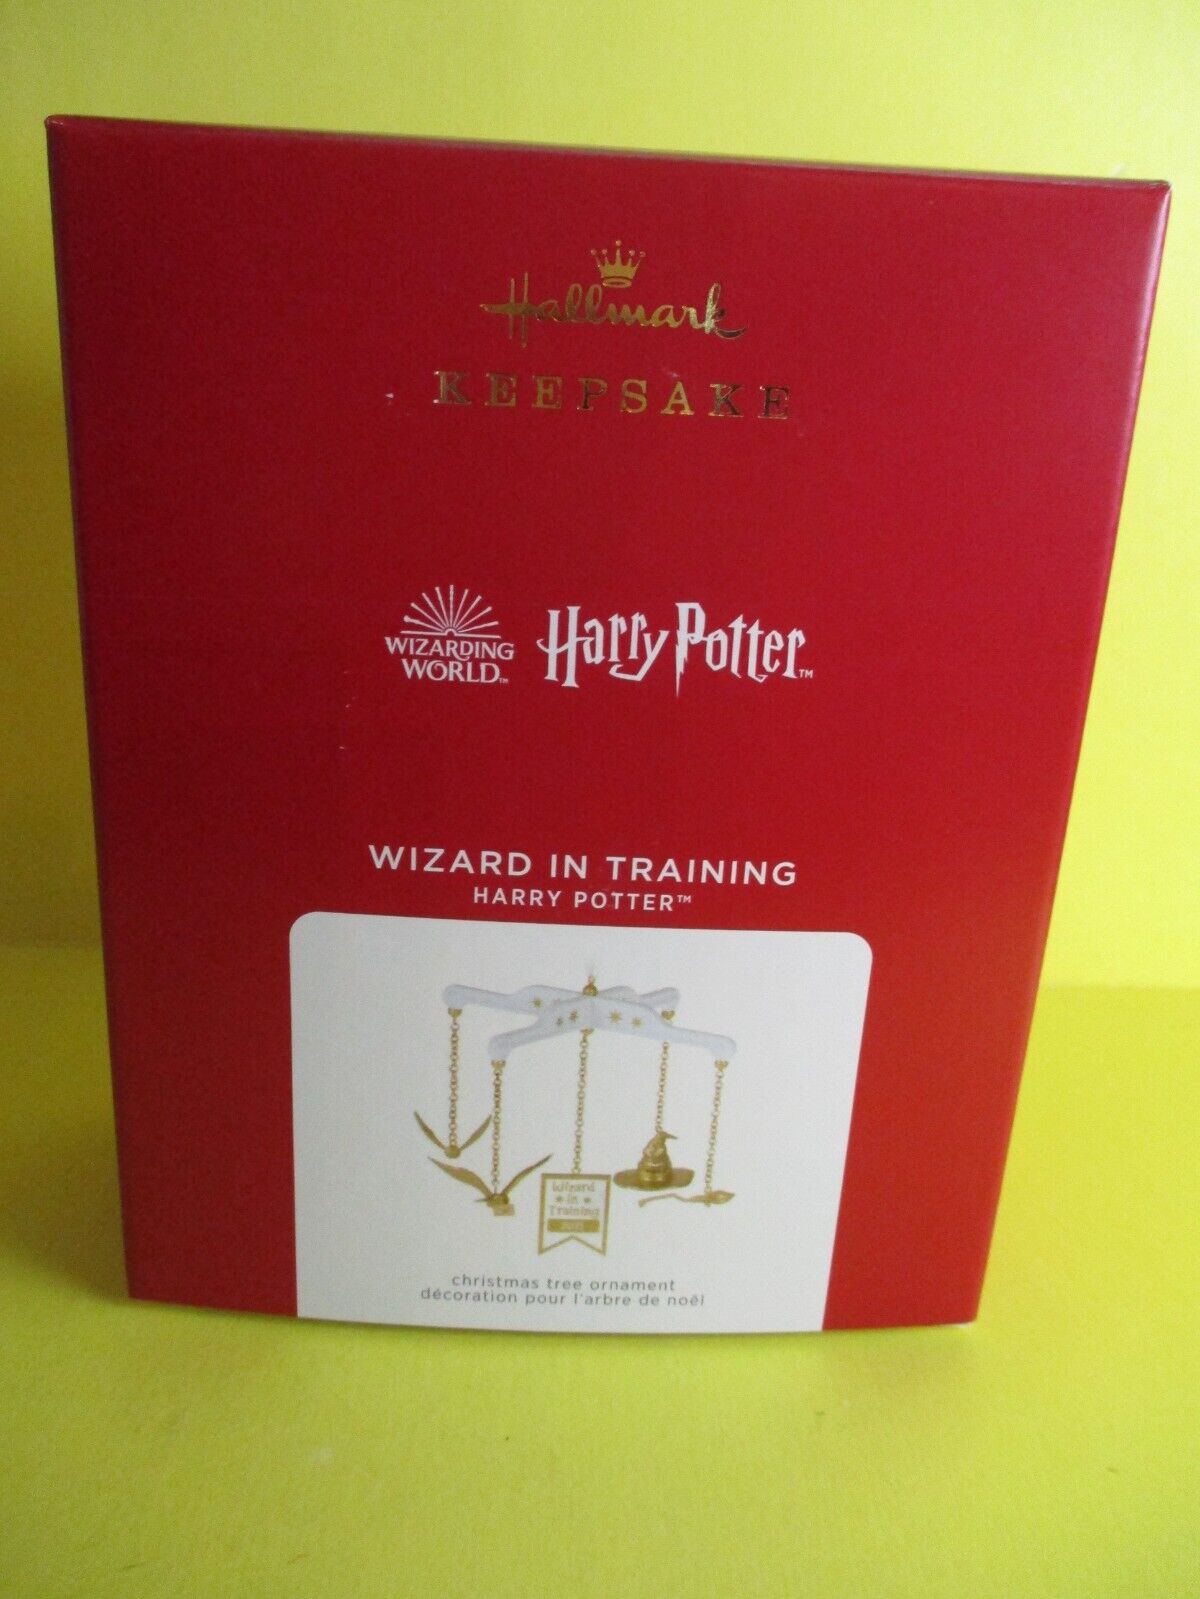 2021 Hallmark Wizard in Training Mobile Wizarding World Harry Potter New but SDB